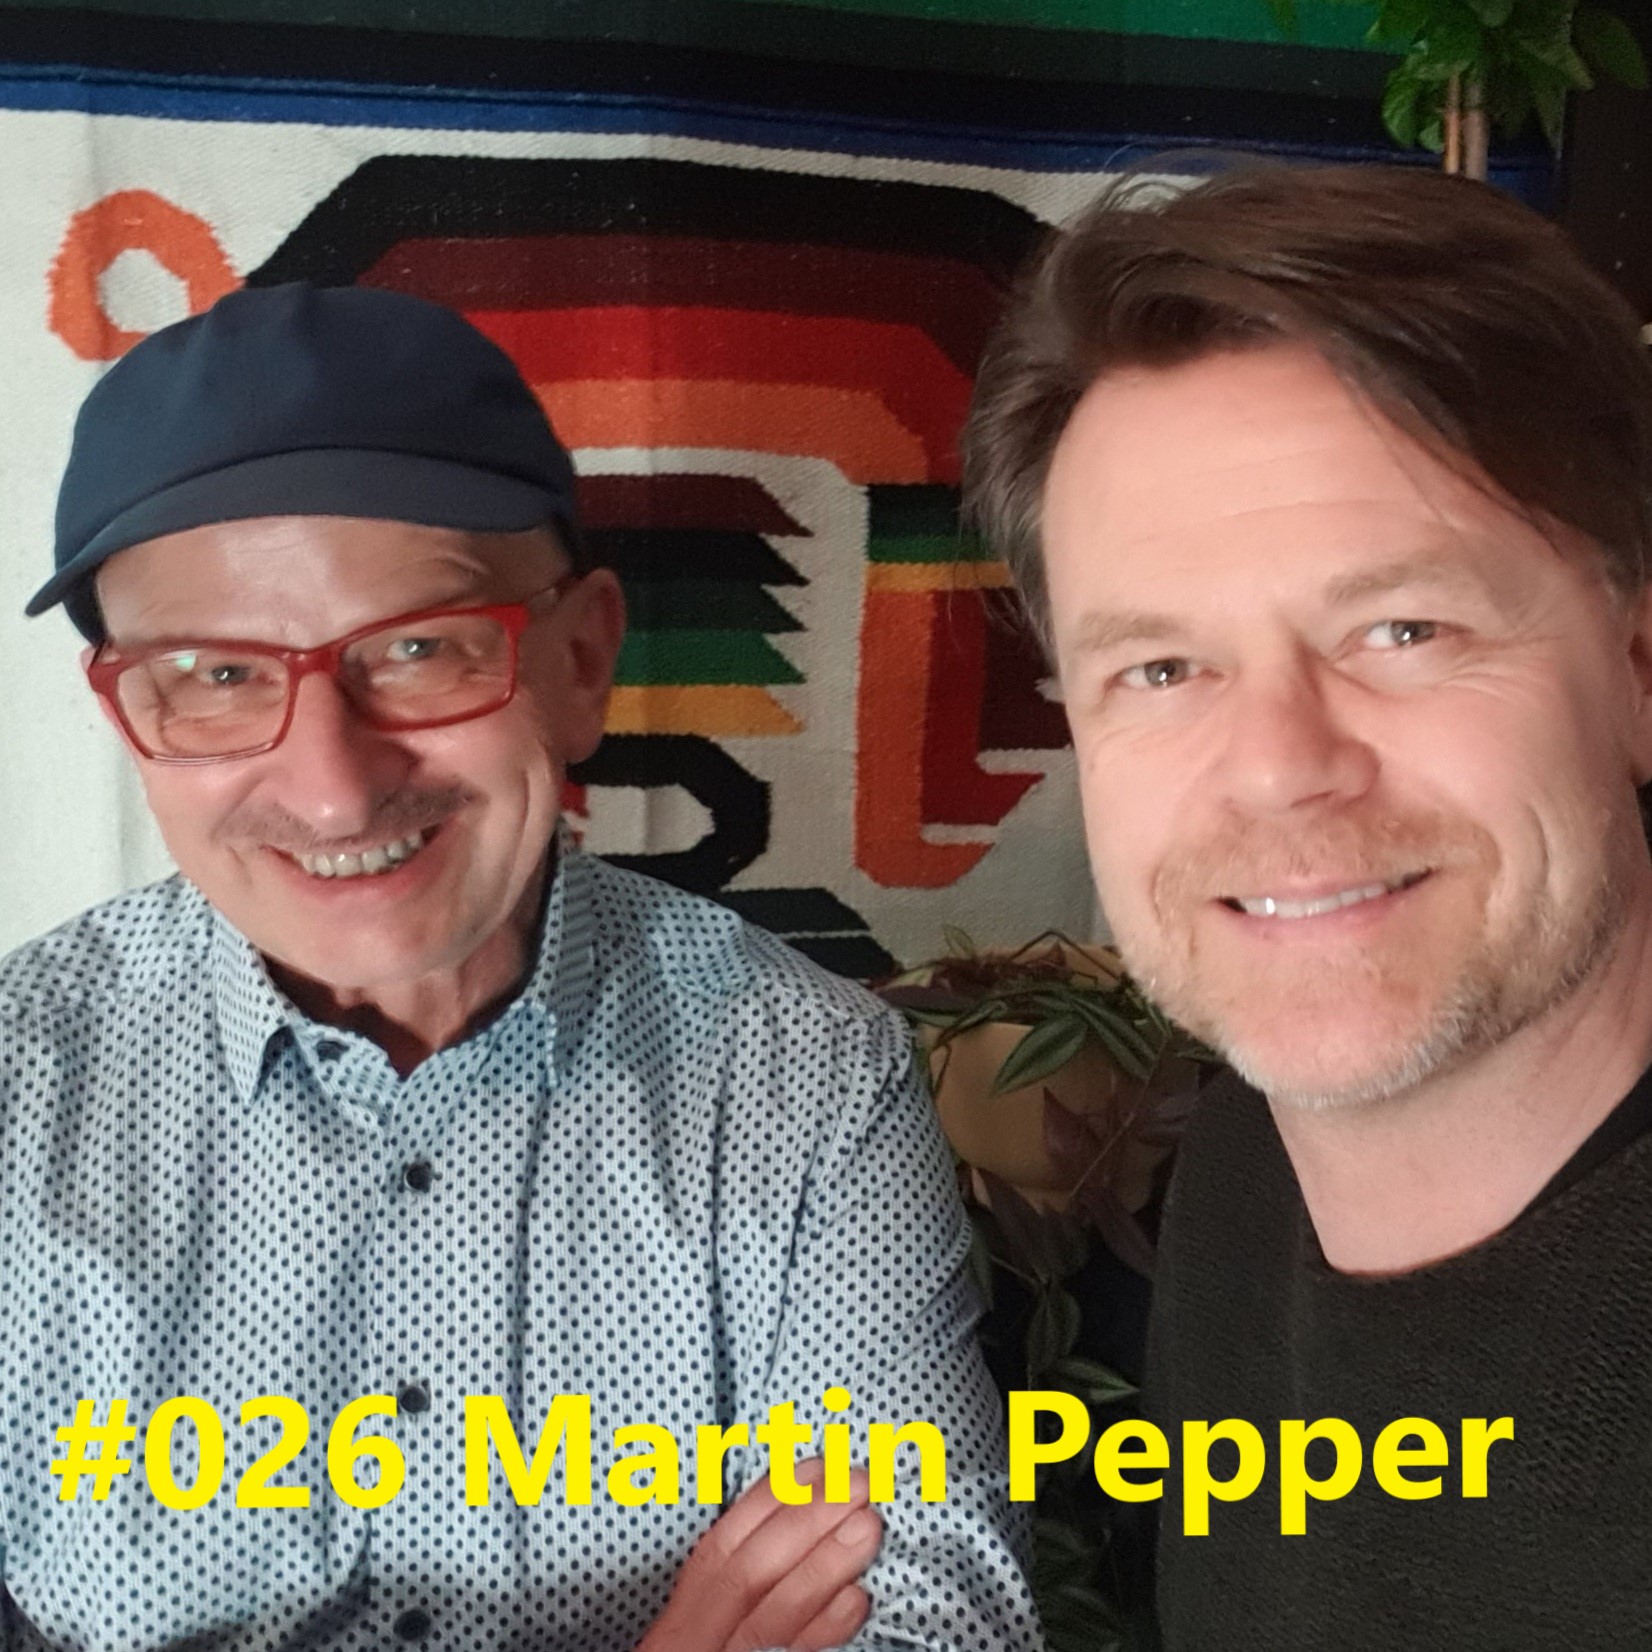 Martin Pepper